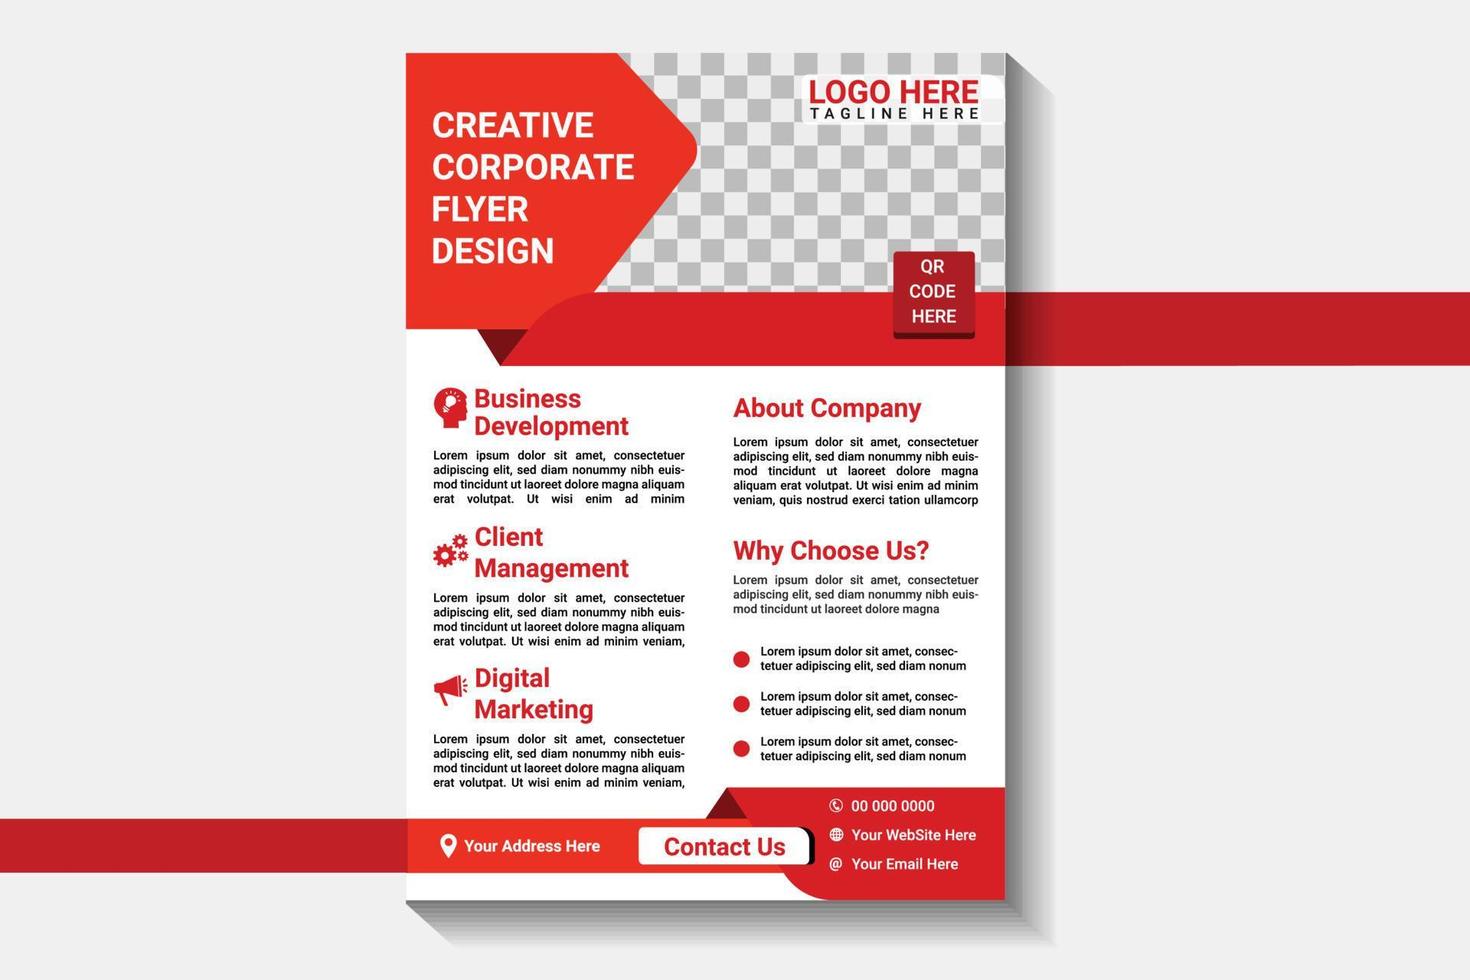 Professional Crative Corporate Flyer Design templates vector